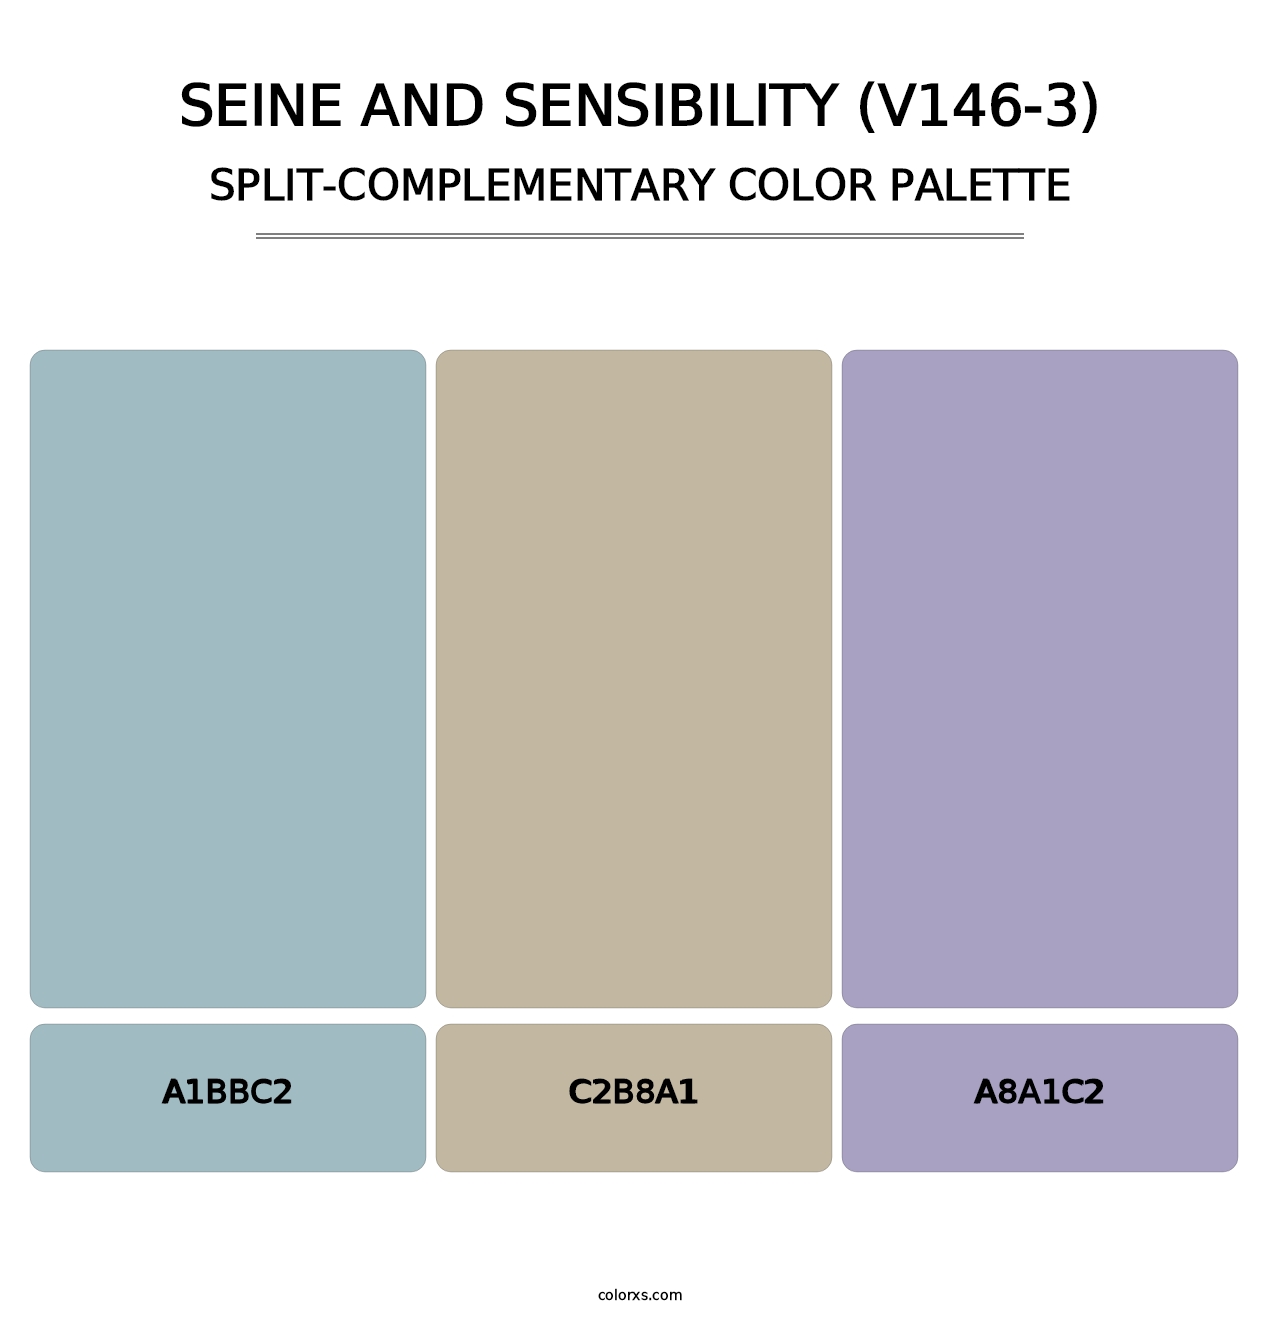 Seine and Sensibility (V146-3) - Split-Complementary Color Palette